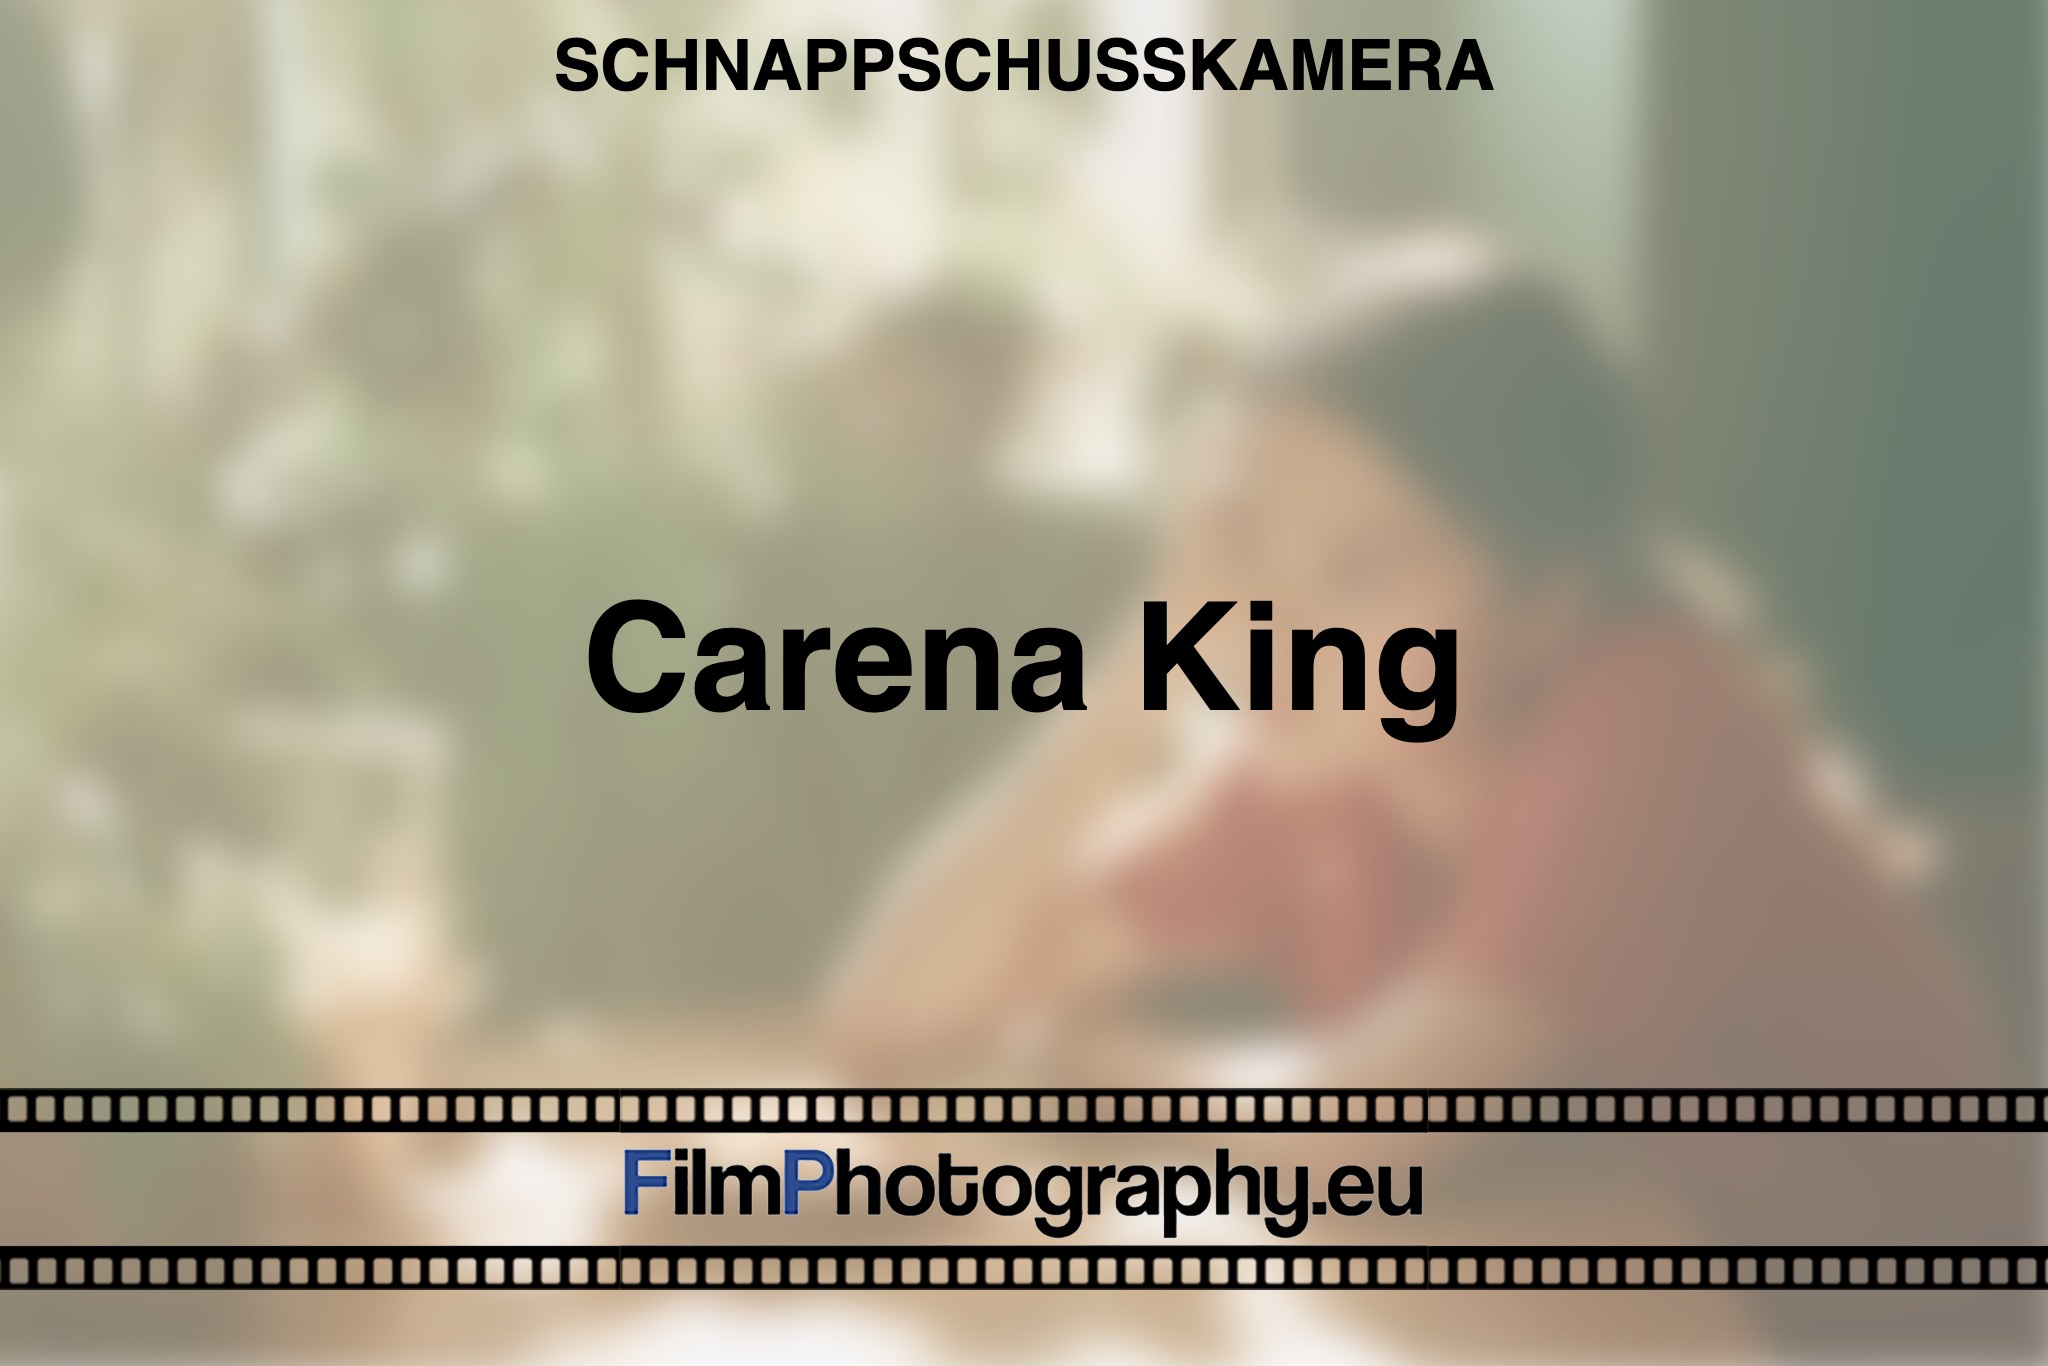 carena-king-schnappschusskamera-bnv